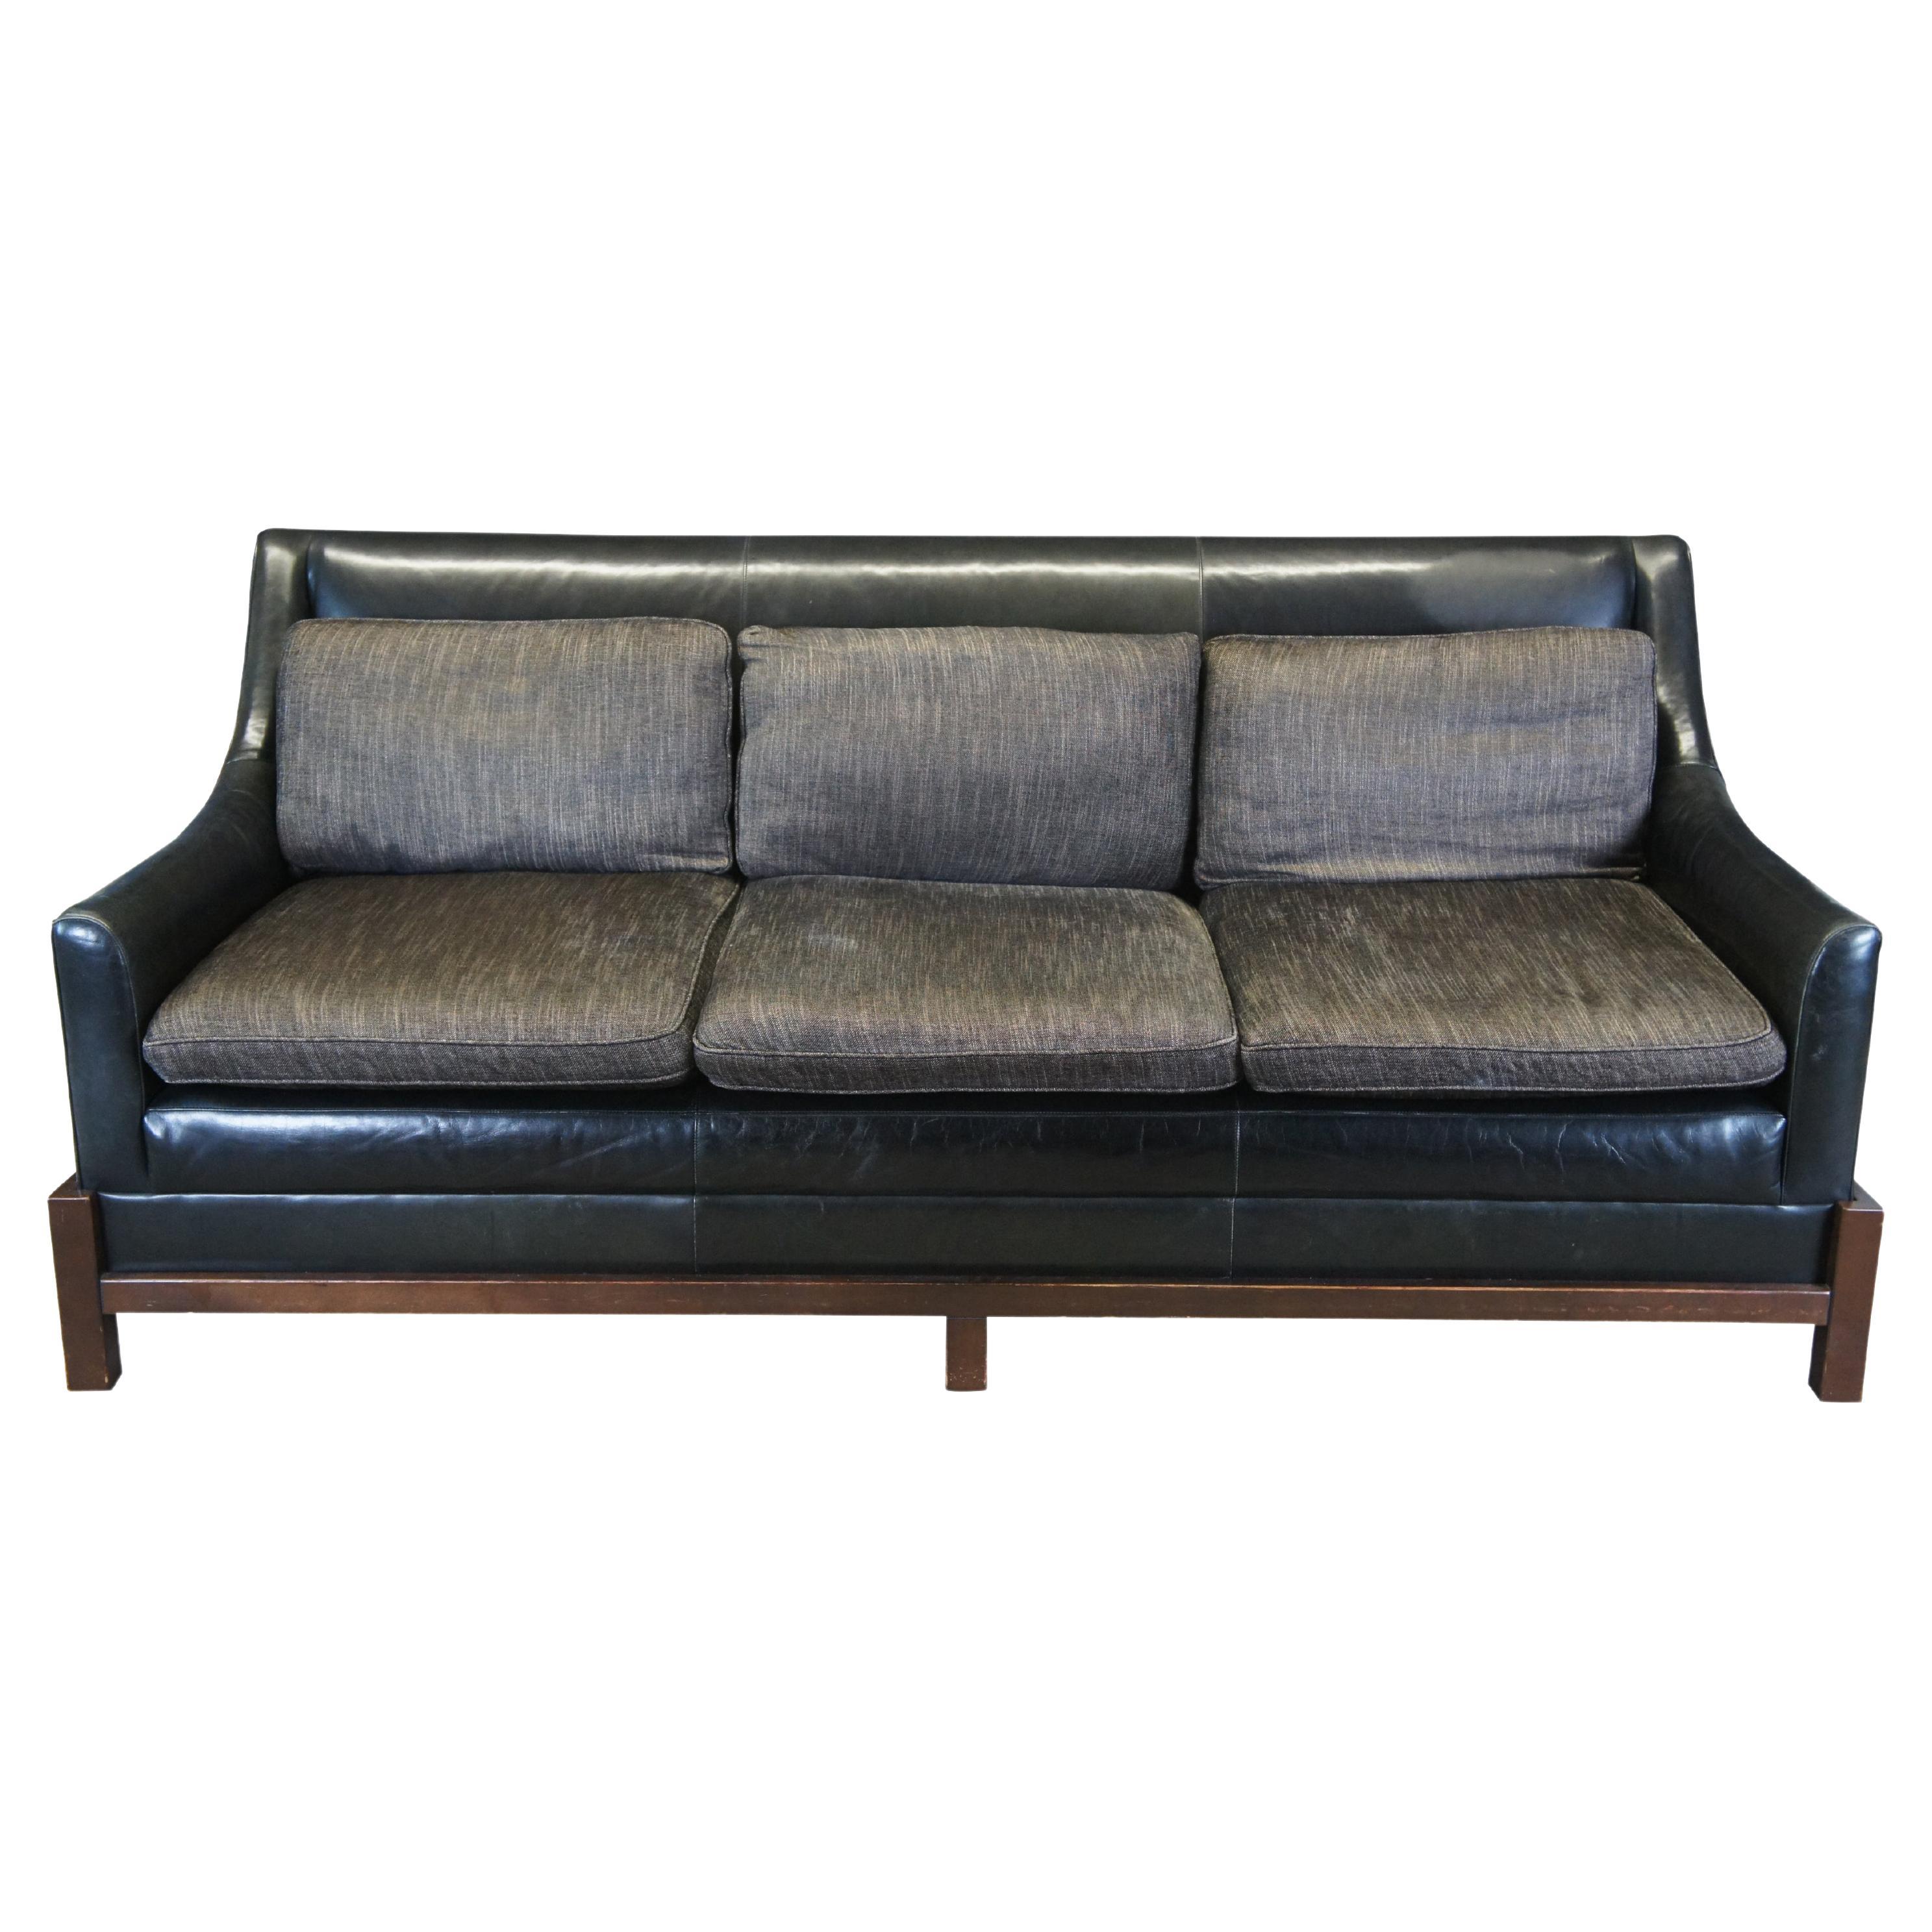 Vintage Baker Furniture Laura Kirar Modern Black Leather 3 Seater Neue Sofa